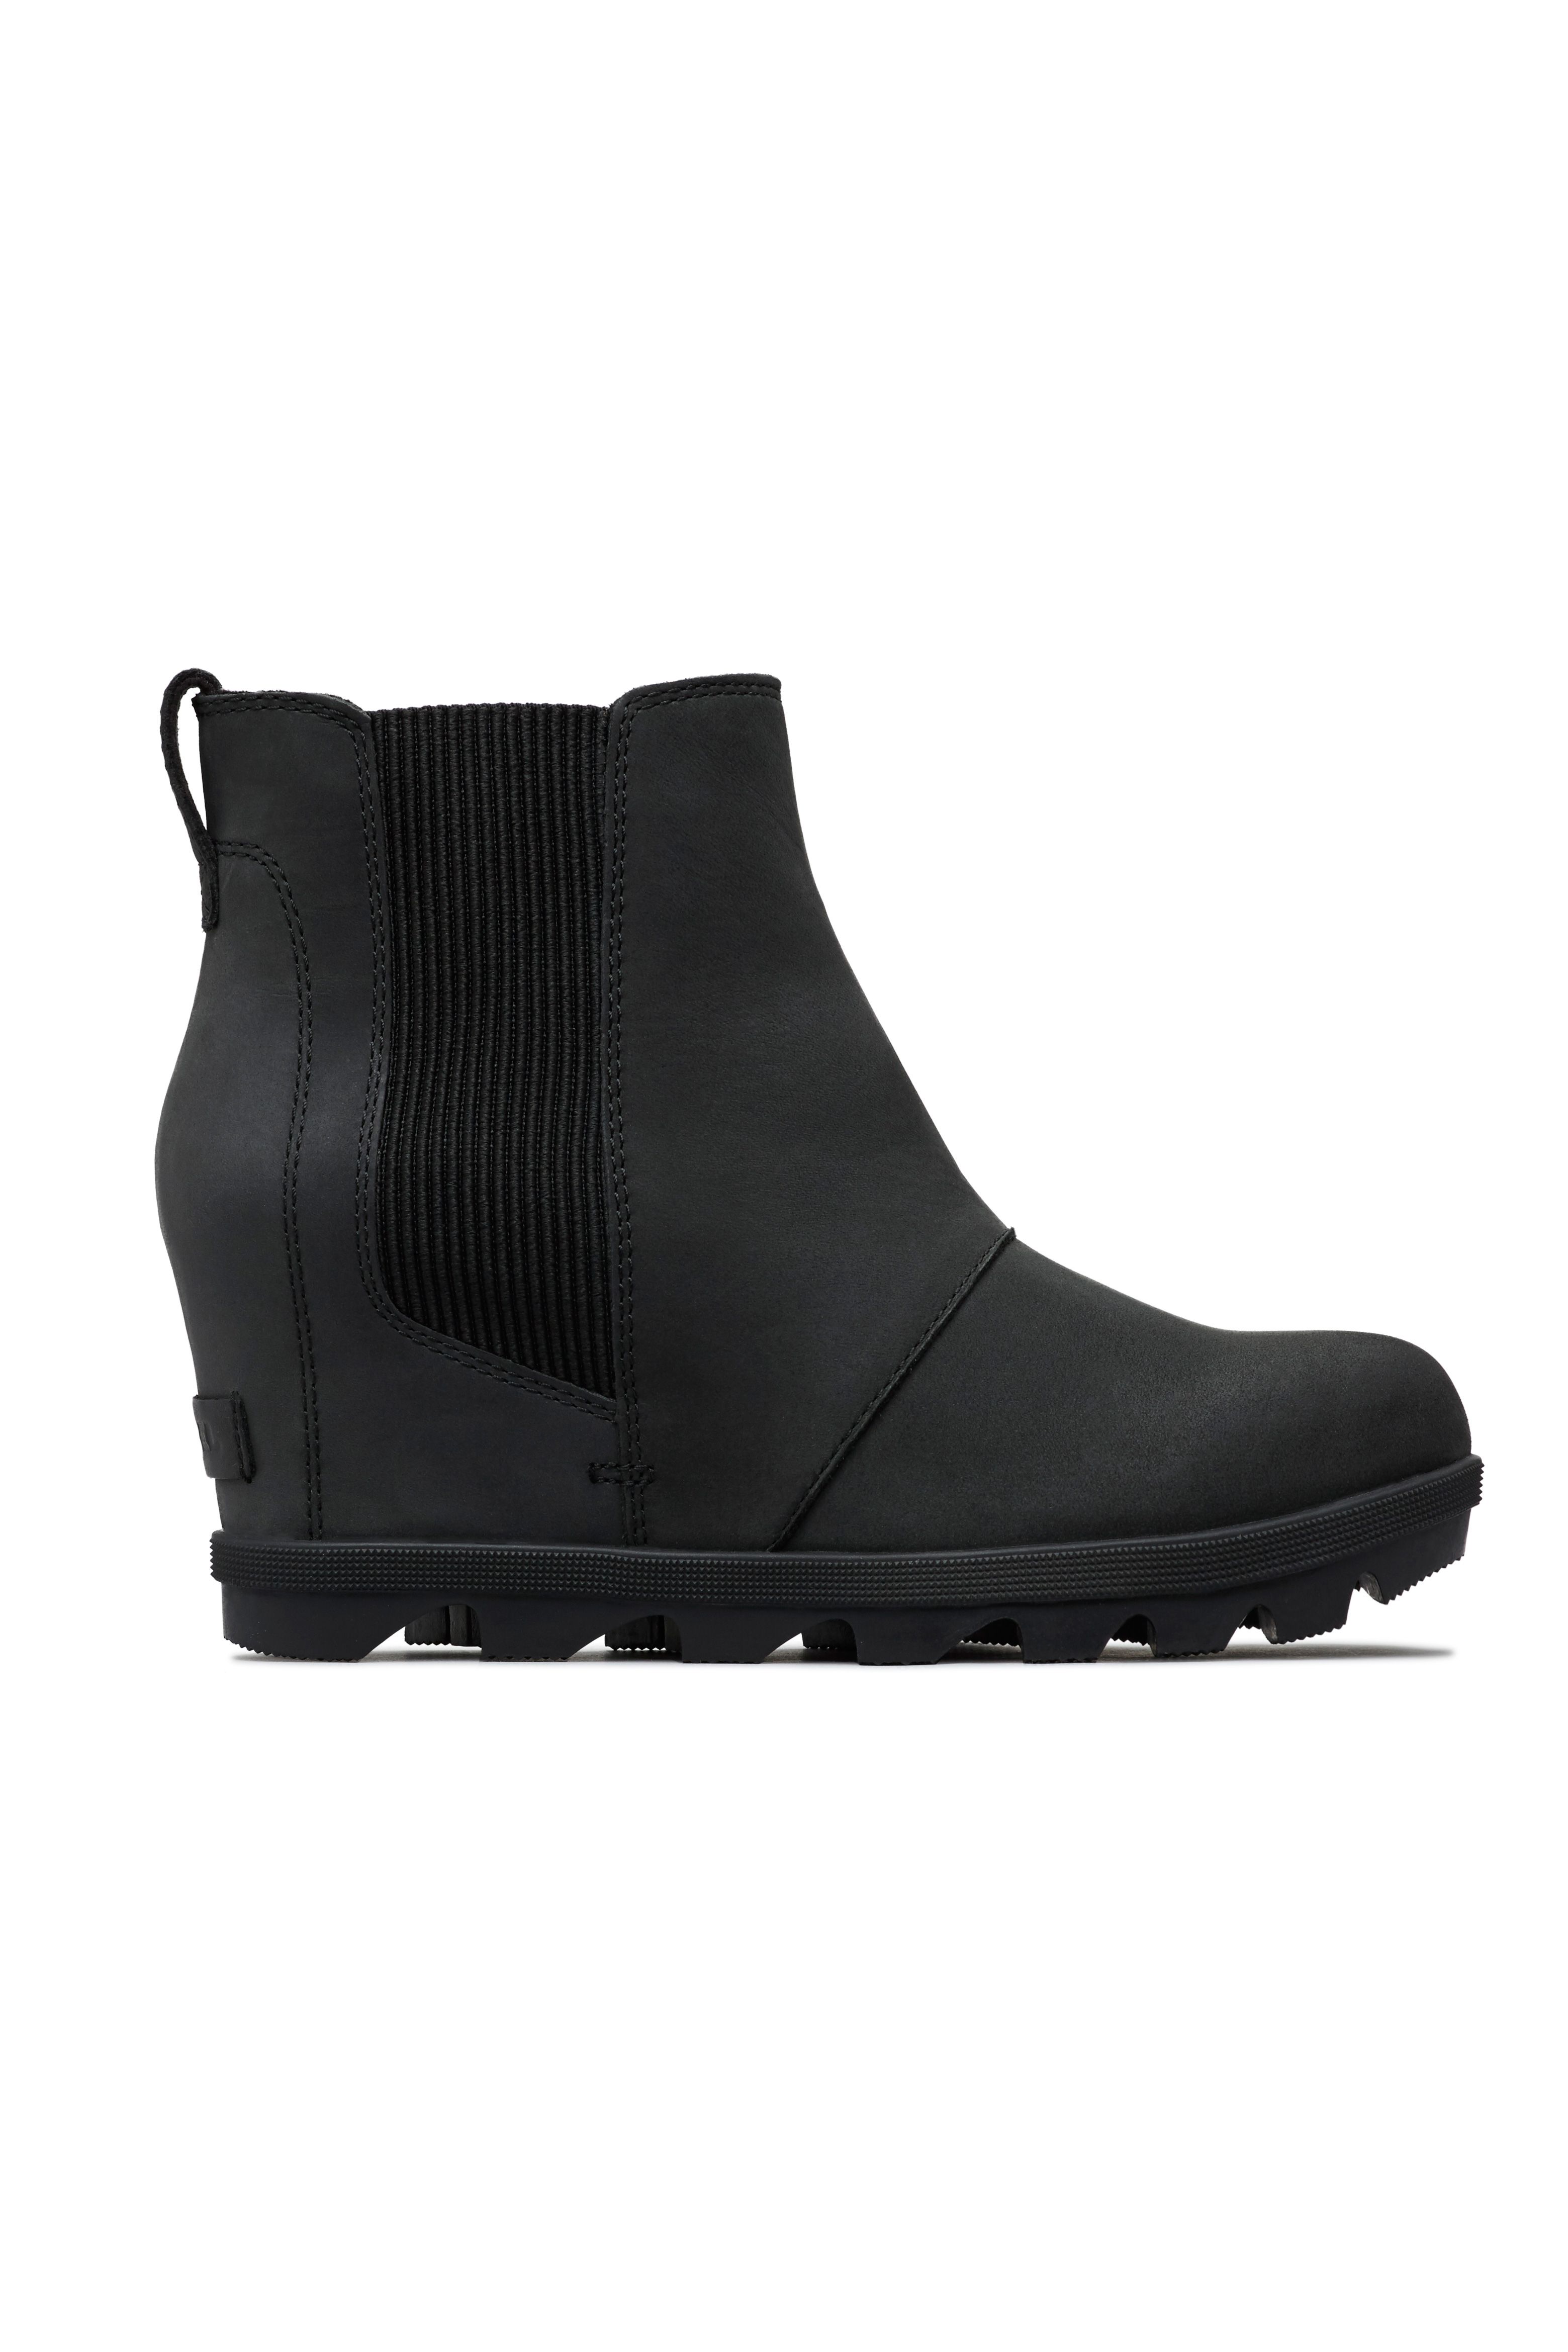 Stylish Sorel Boots - Fashionable Waterproof Snow Boots